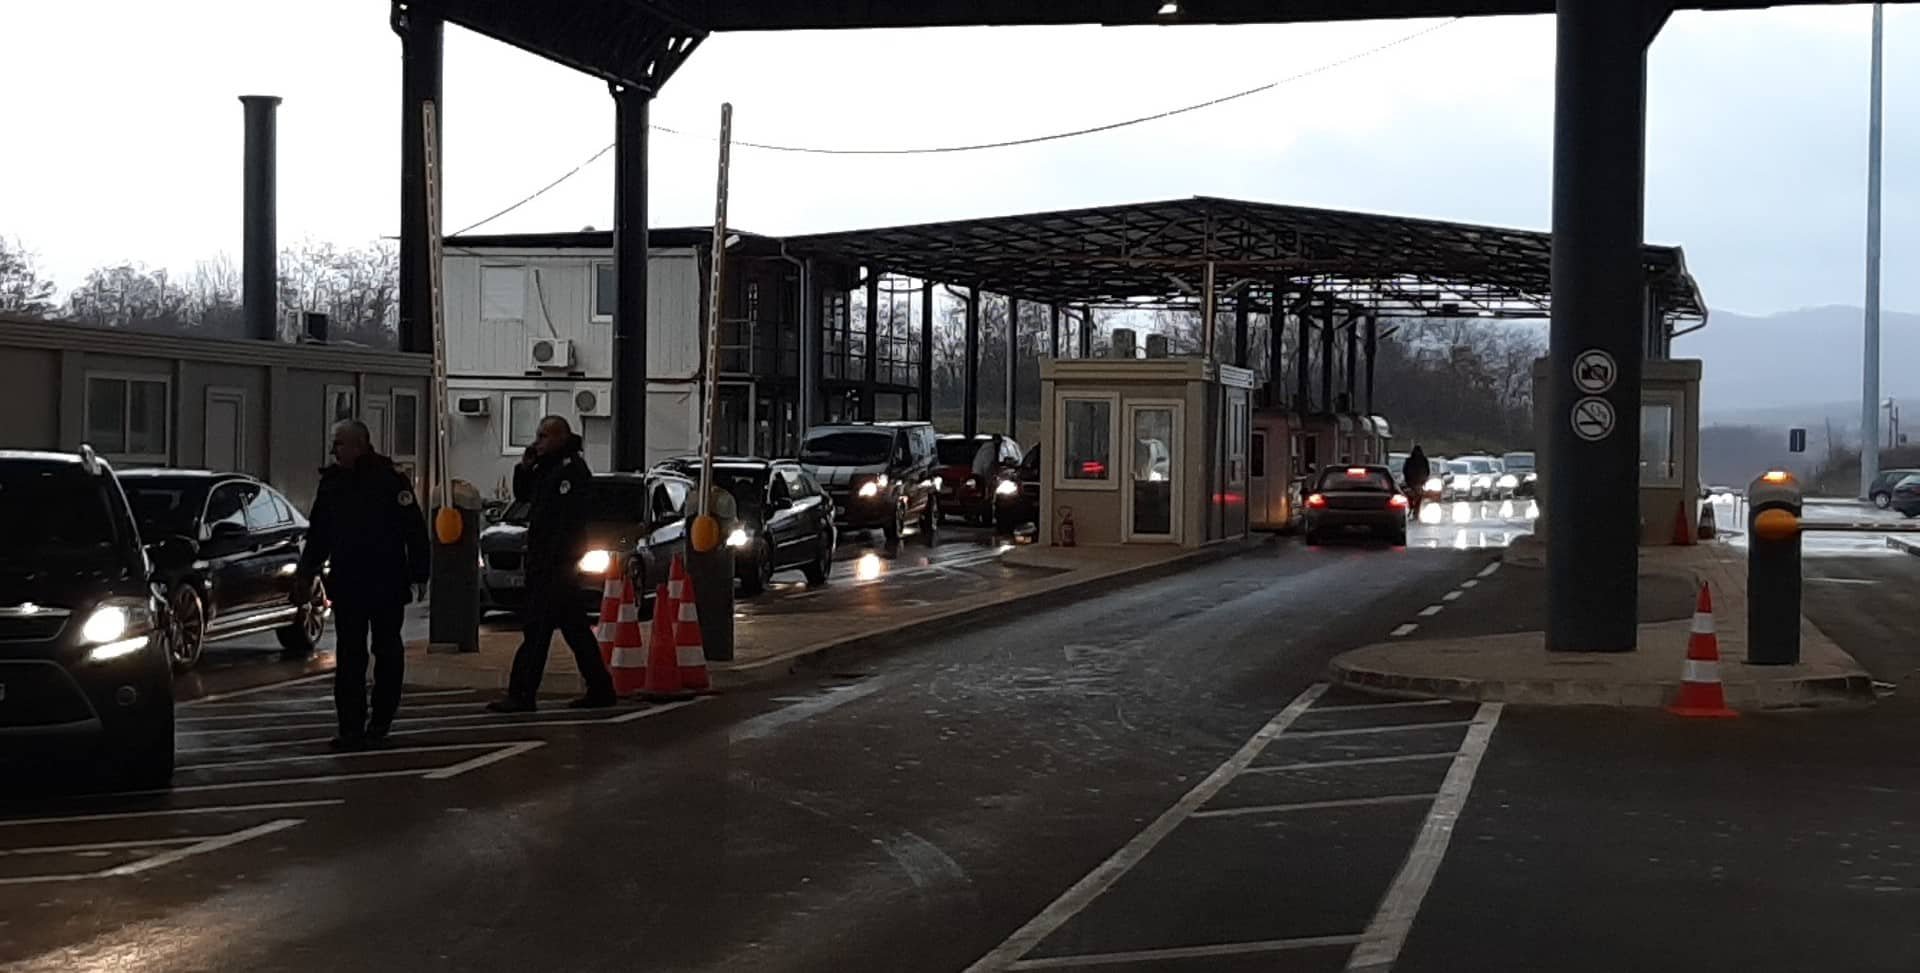 The border points in Merdare, Jarinje, and Bernjak remain blocked